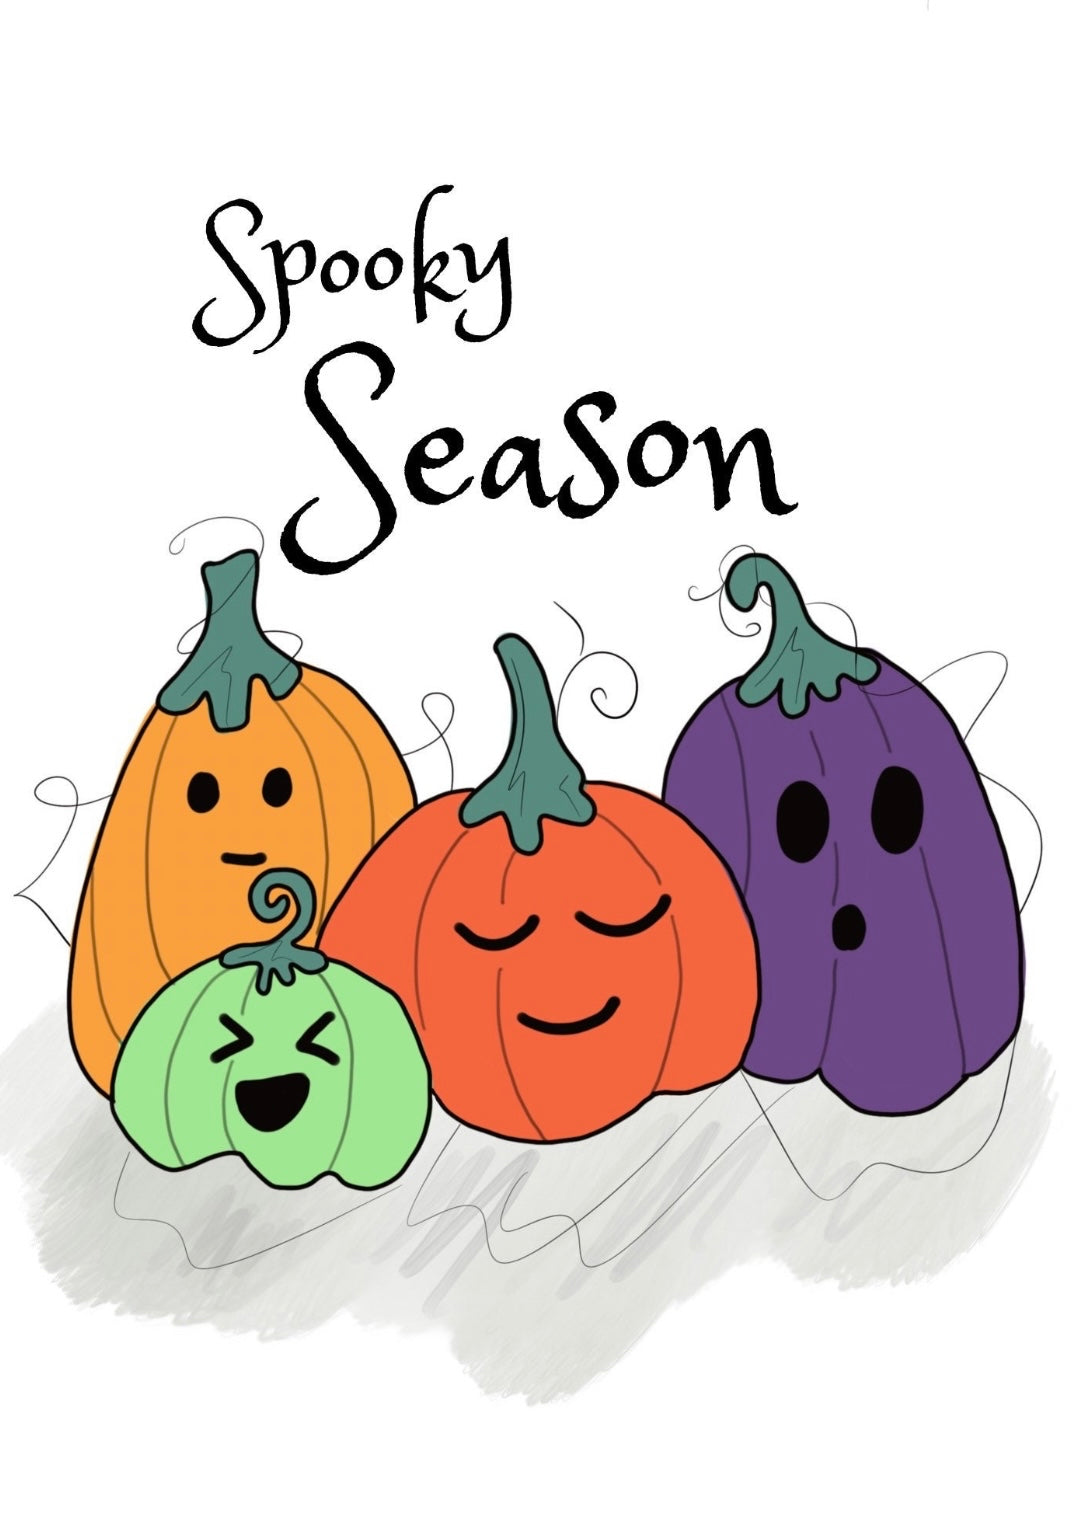 Spooky Season Print